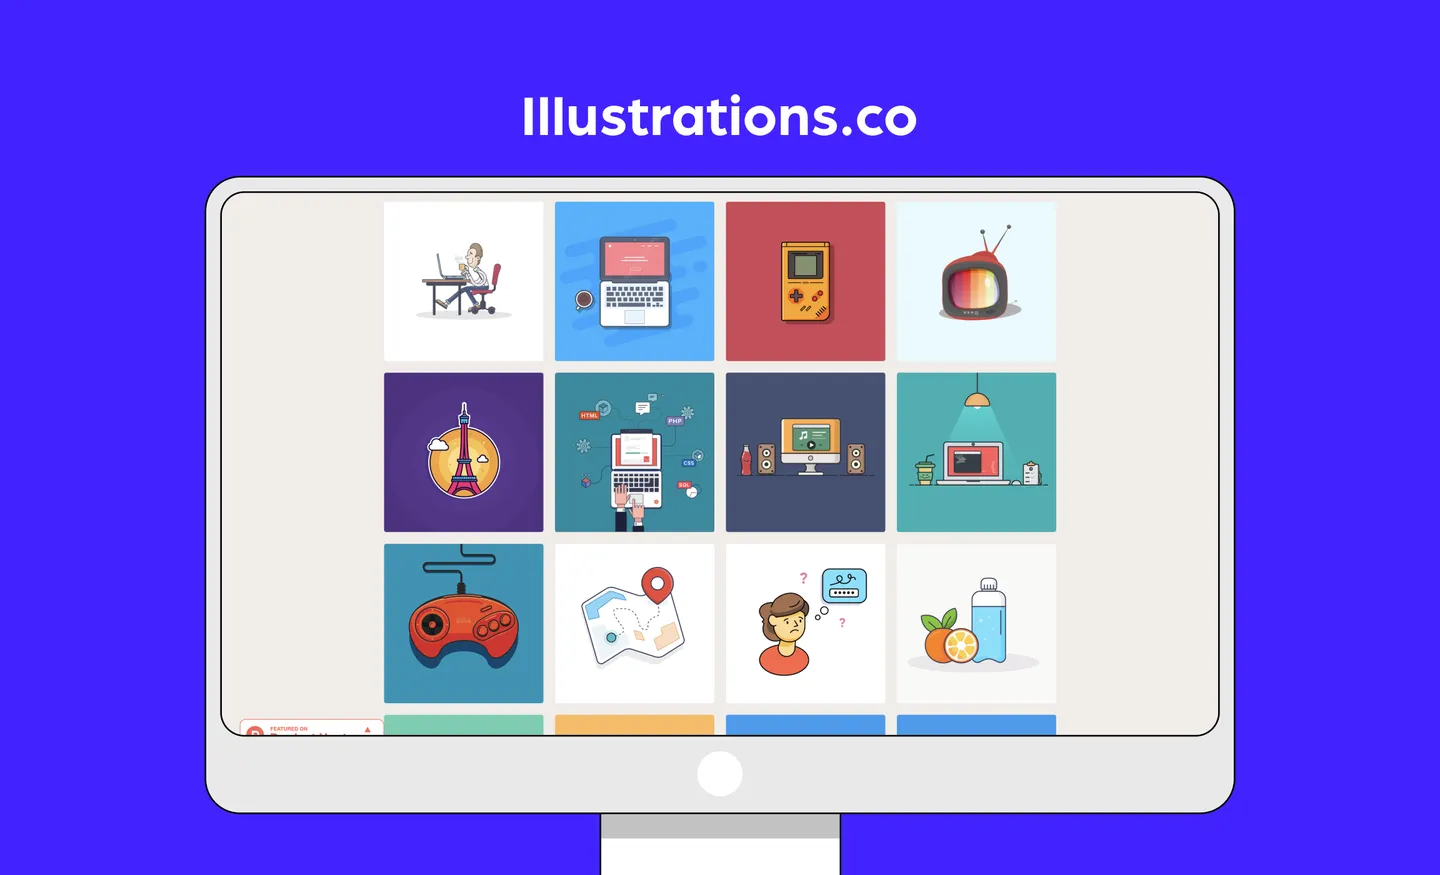 Illustrations.co